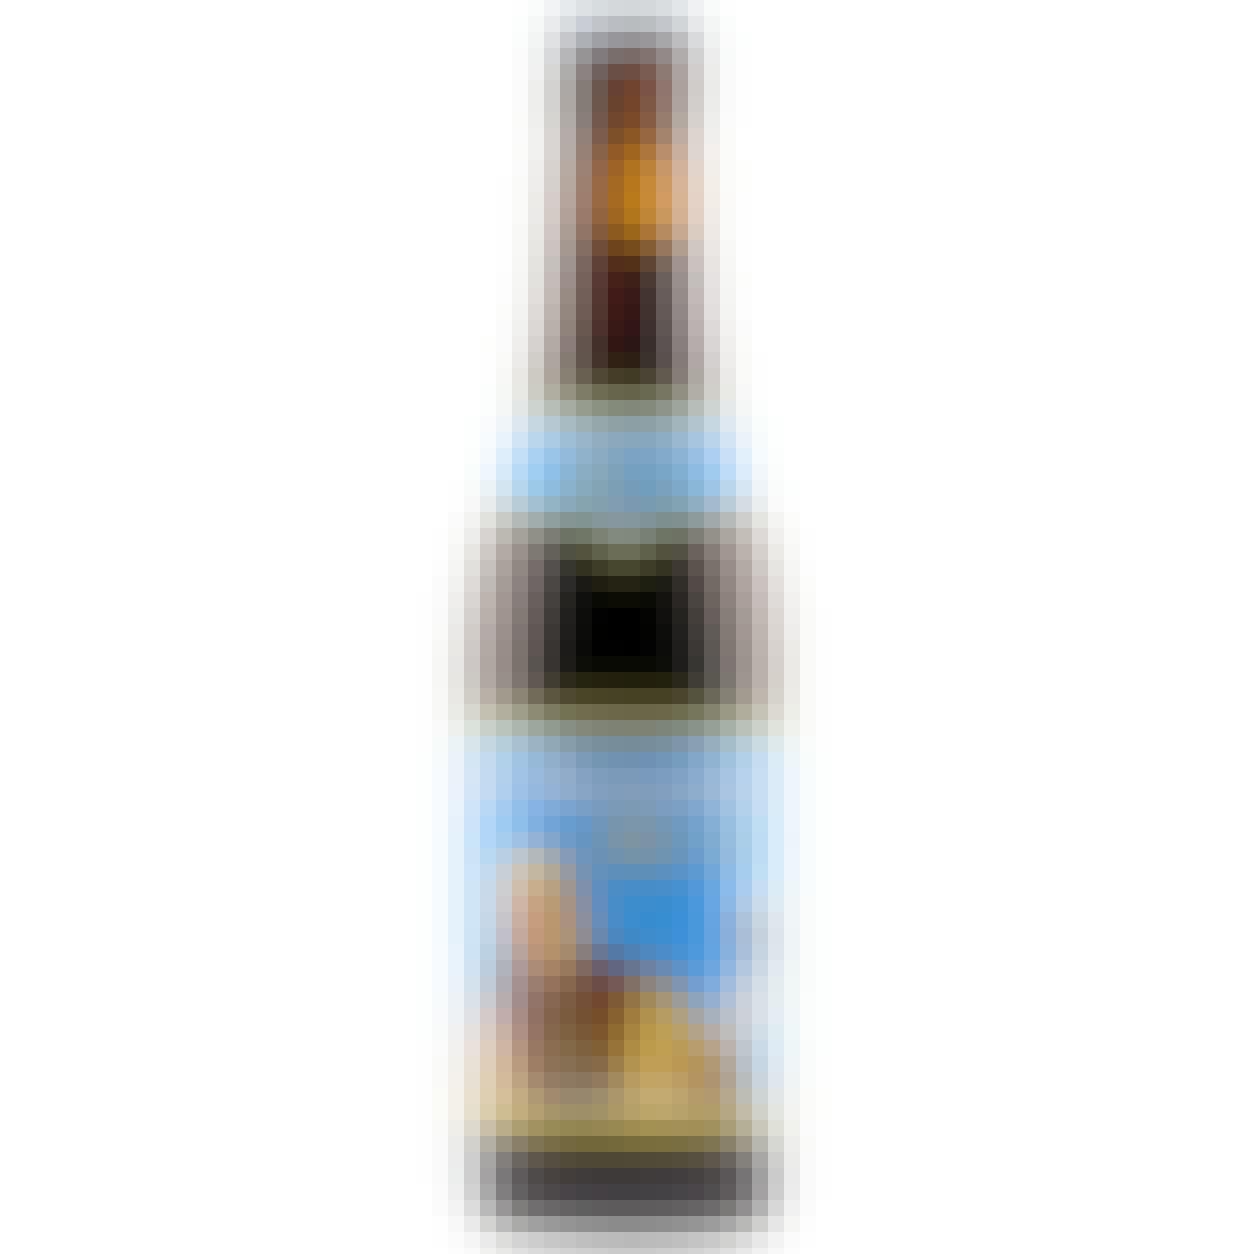 St. Bernardus Abt 12 11.2 oz. Bottle